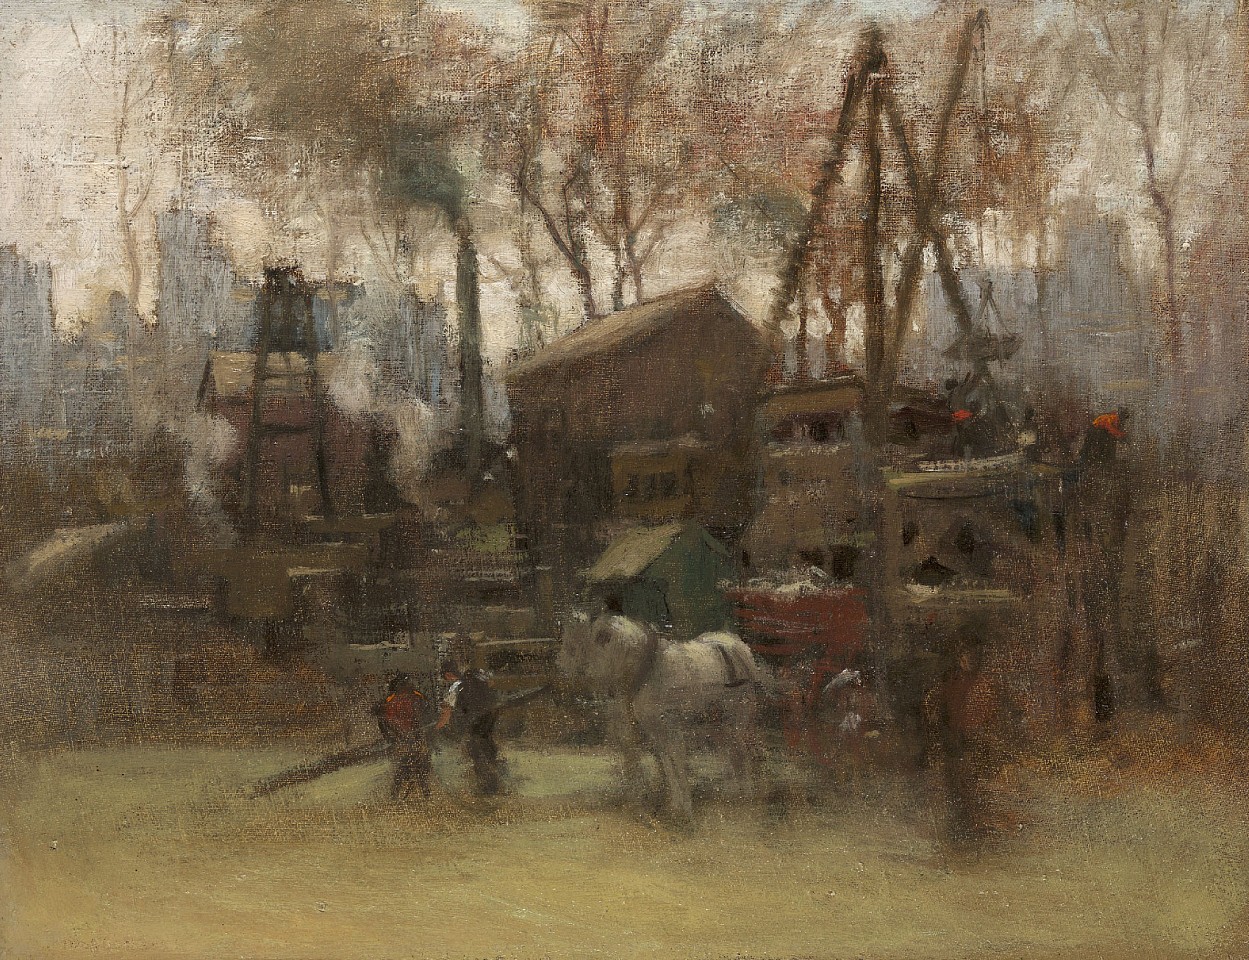 Paul Cornoyer, Construction Site, New York, c. 1910
oil on canvas board, 12 x 16 in. (30.5 x 40.6 cm)
PC190401